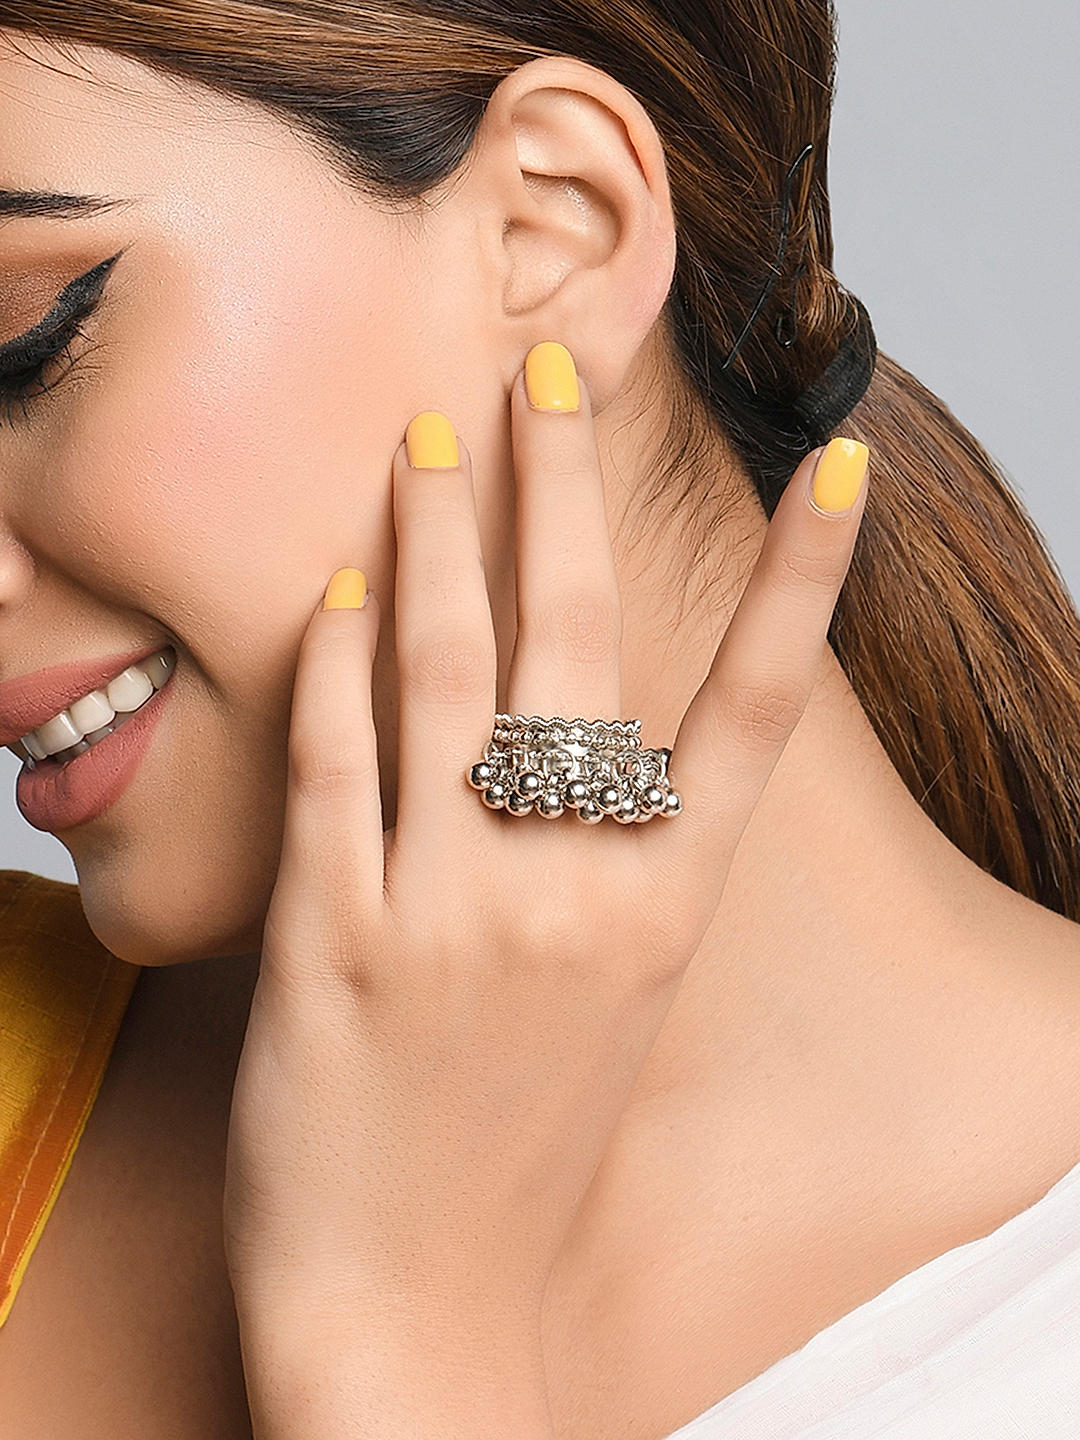 Buy Premium 925 Pure Sterling Silver Rings for Women – CLARA